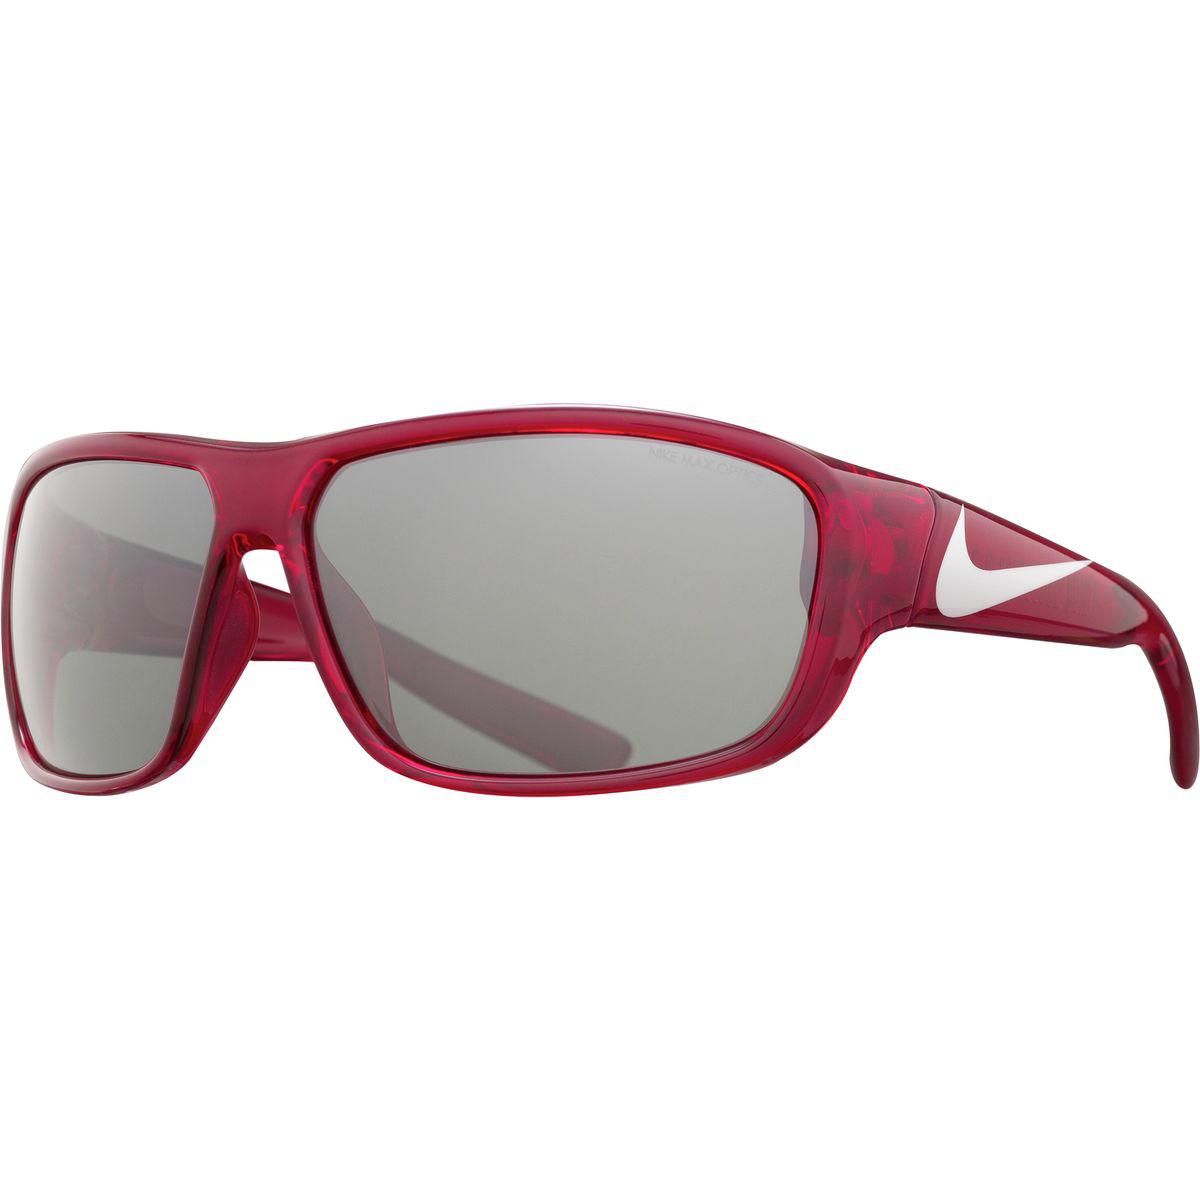 مضاعف نطاق يمارس مقاطعة المنوال قهوة nike mercurial sunglasses red -  womensbusinessbureau.com